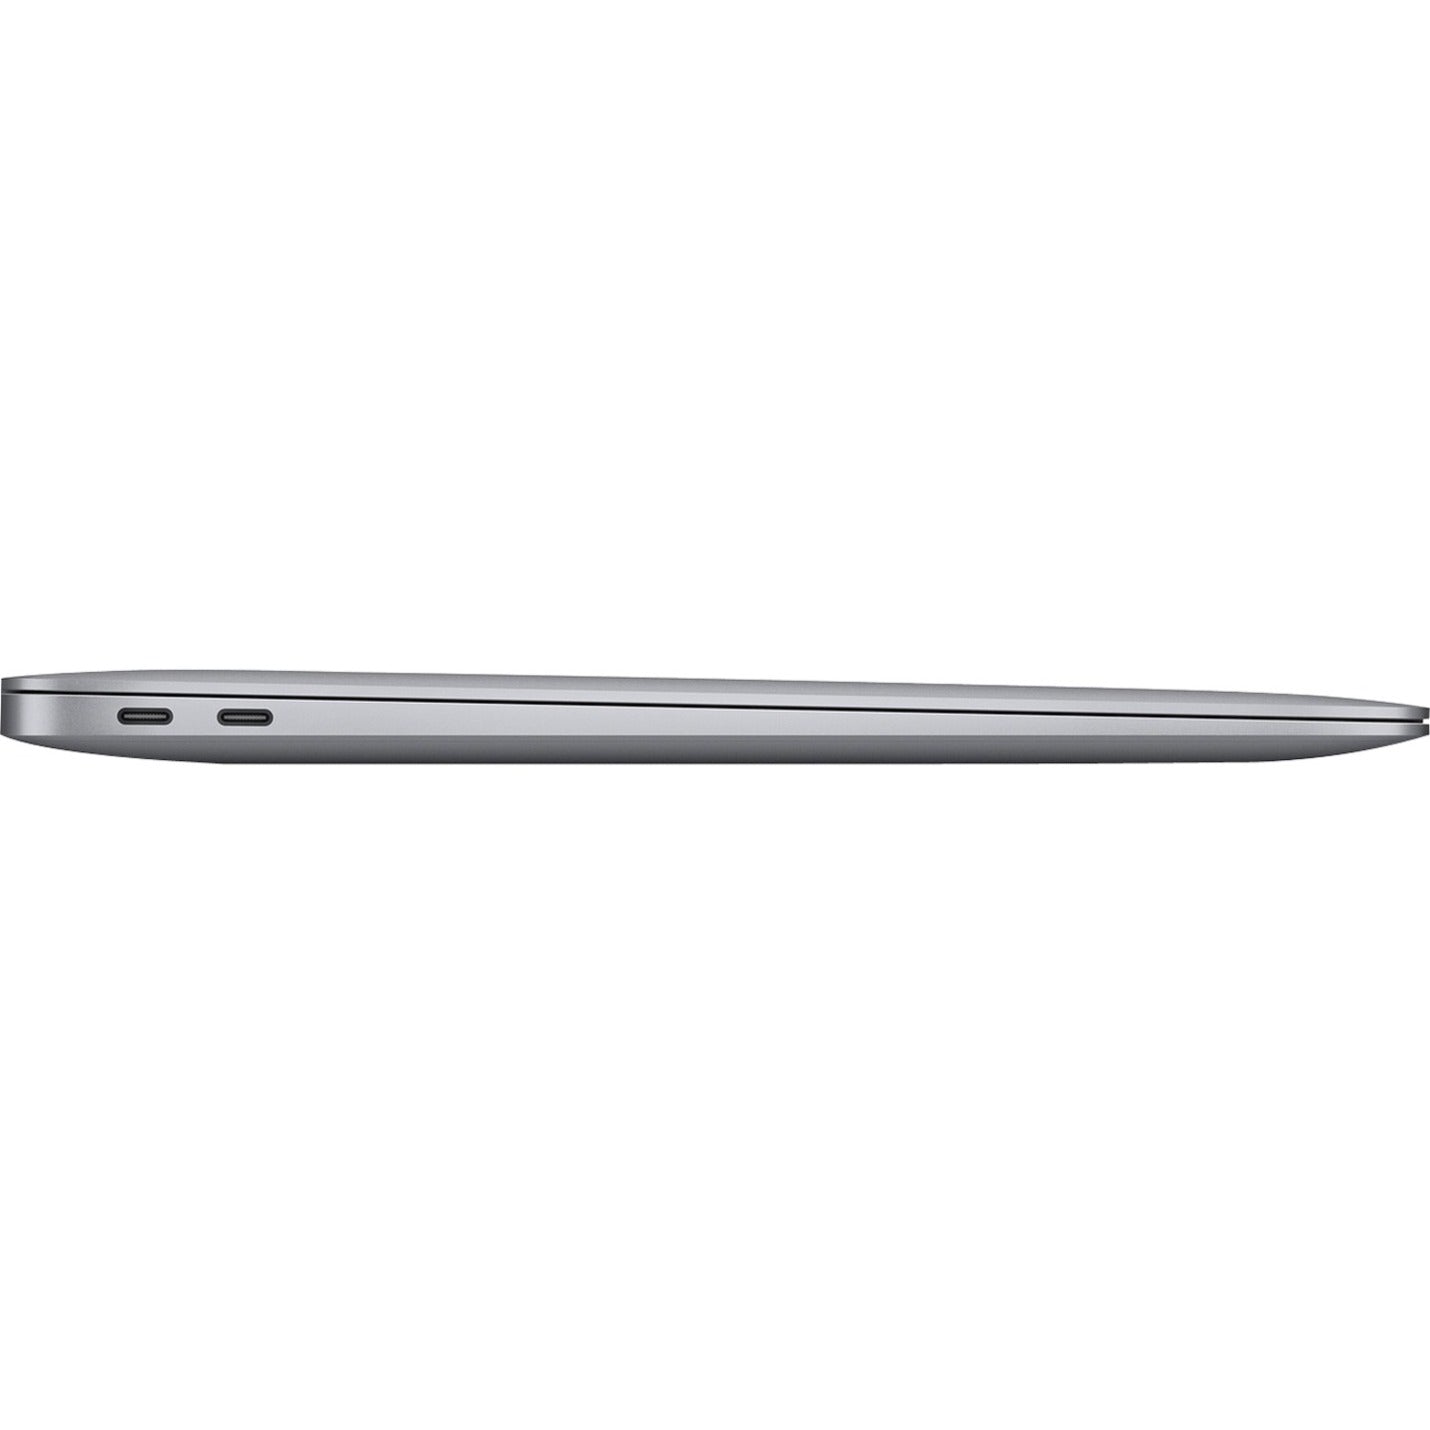 Apple MRE92LL/A MacBook Air 13-inch Space Gray, 8GB RAM, 256GB SSD, macOS Mojave